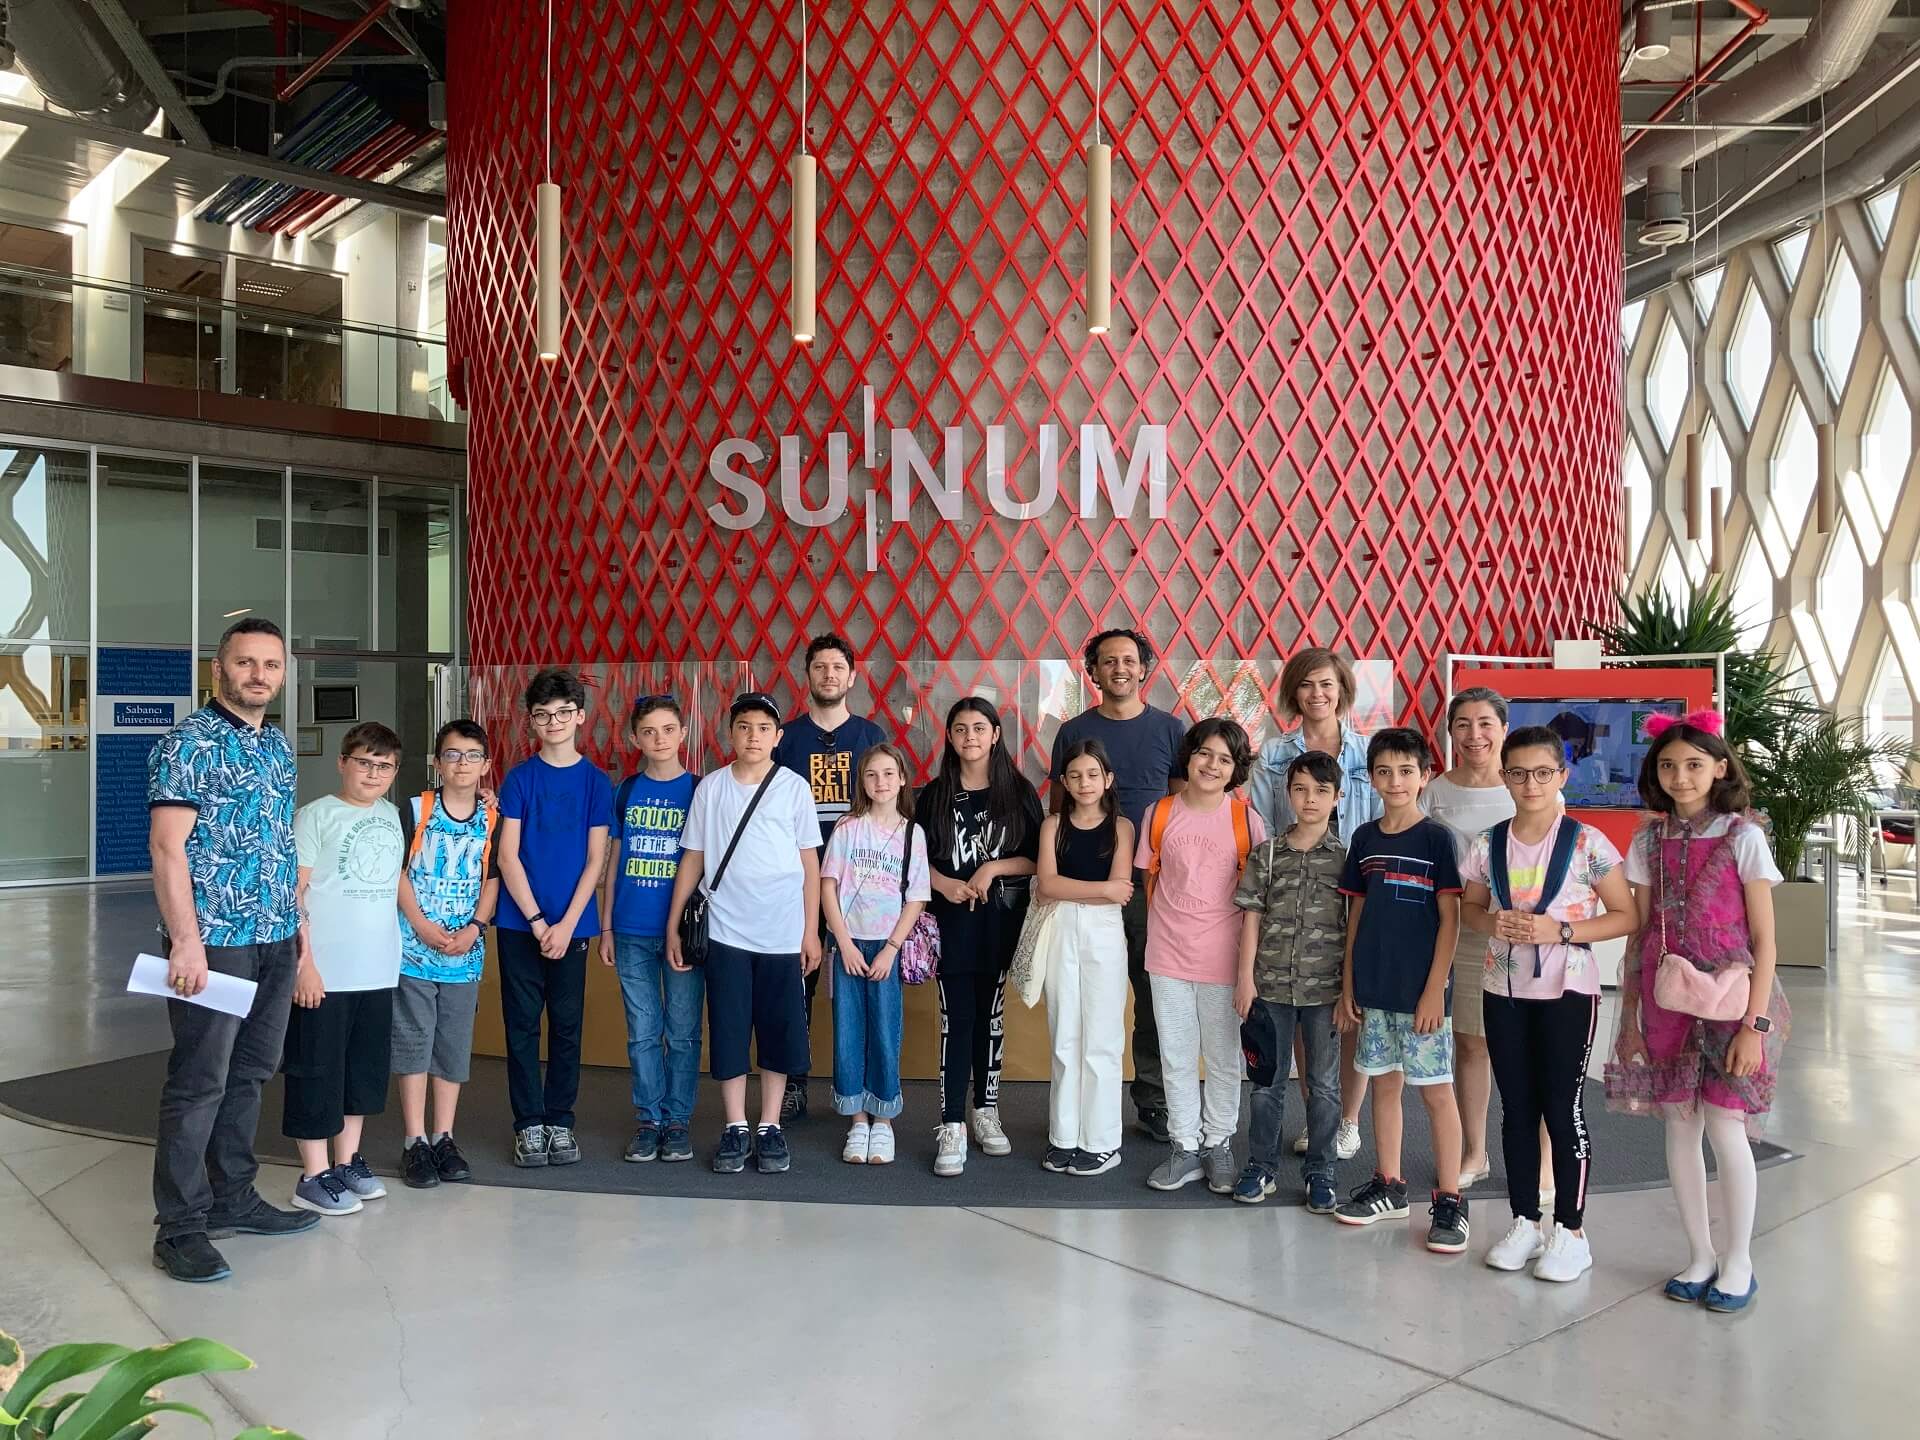 Students visited SUNUM